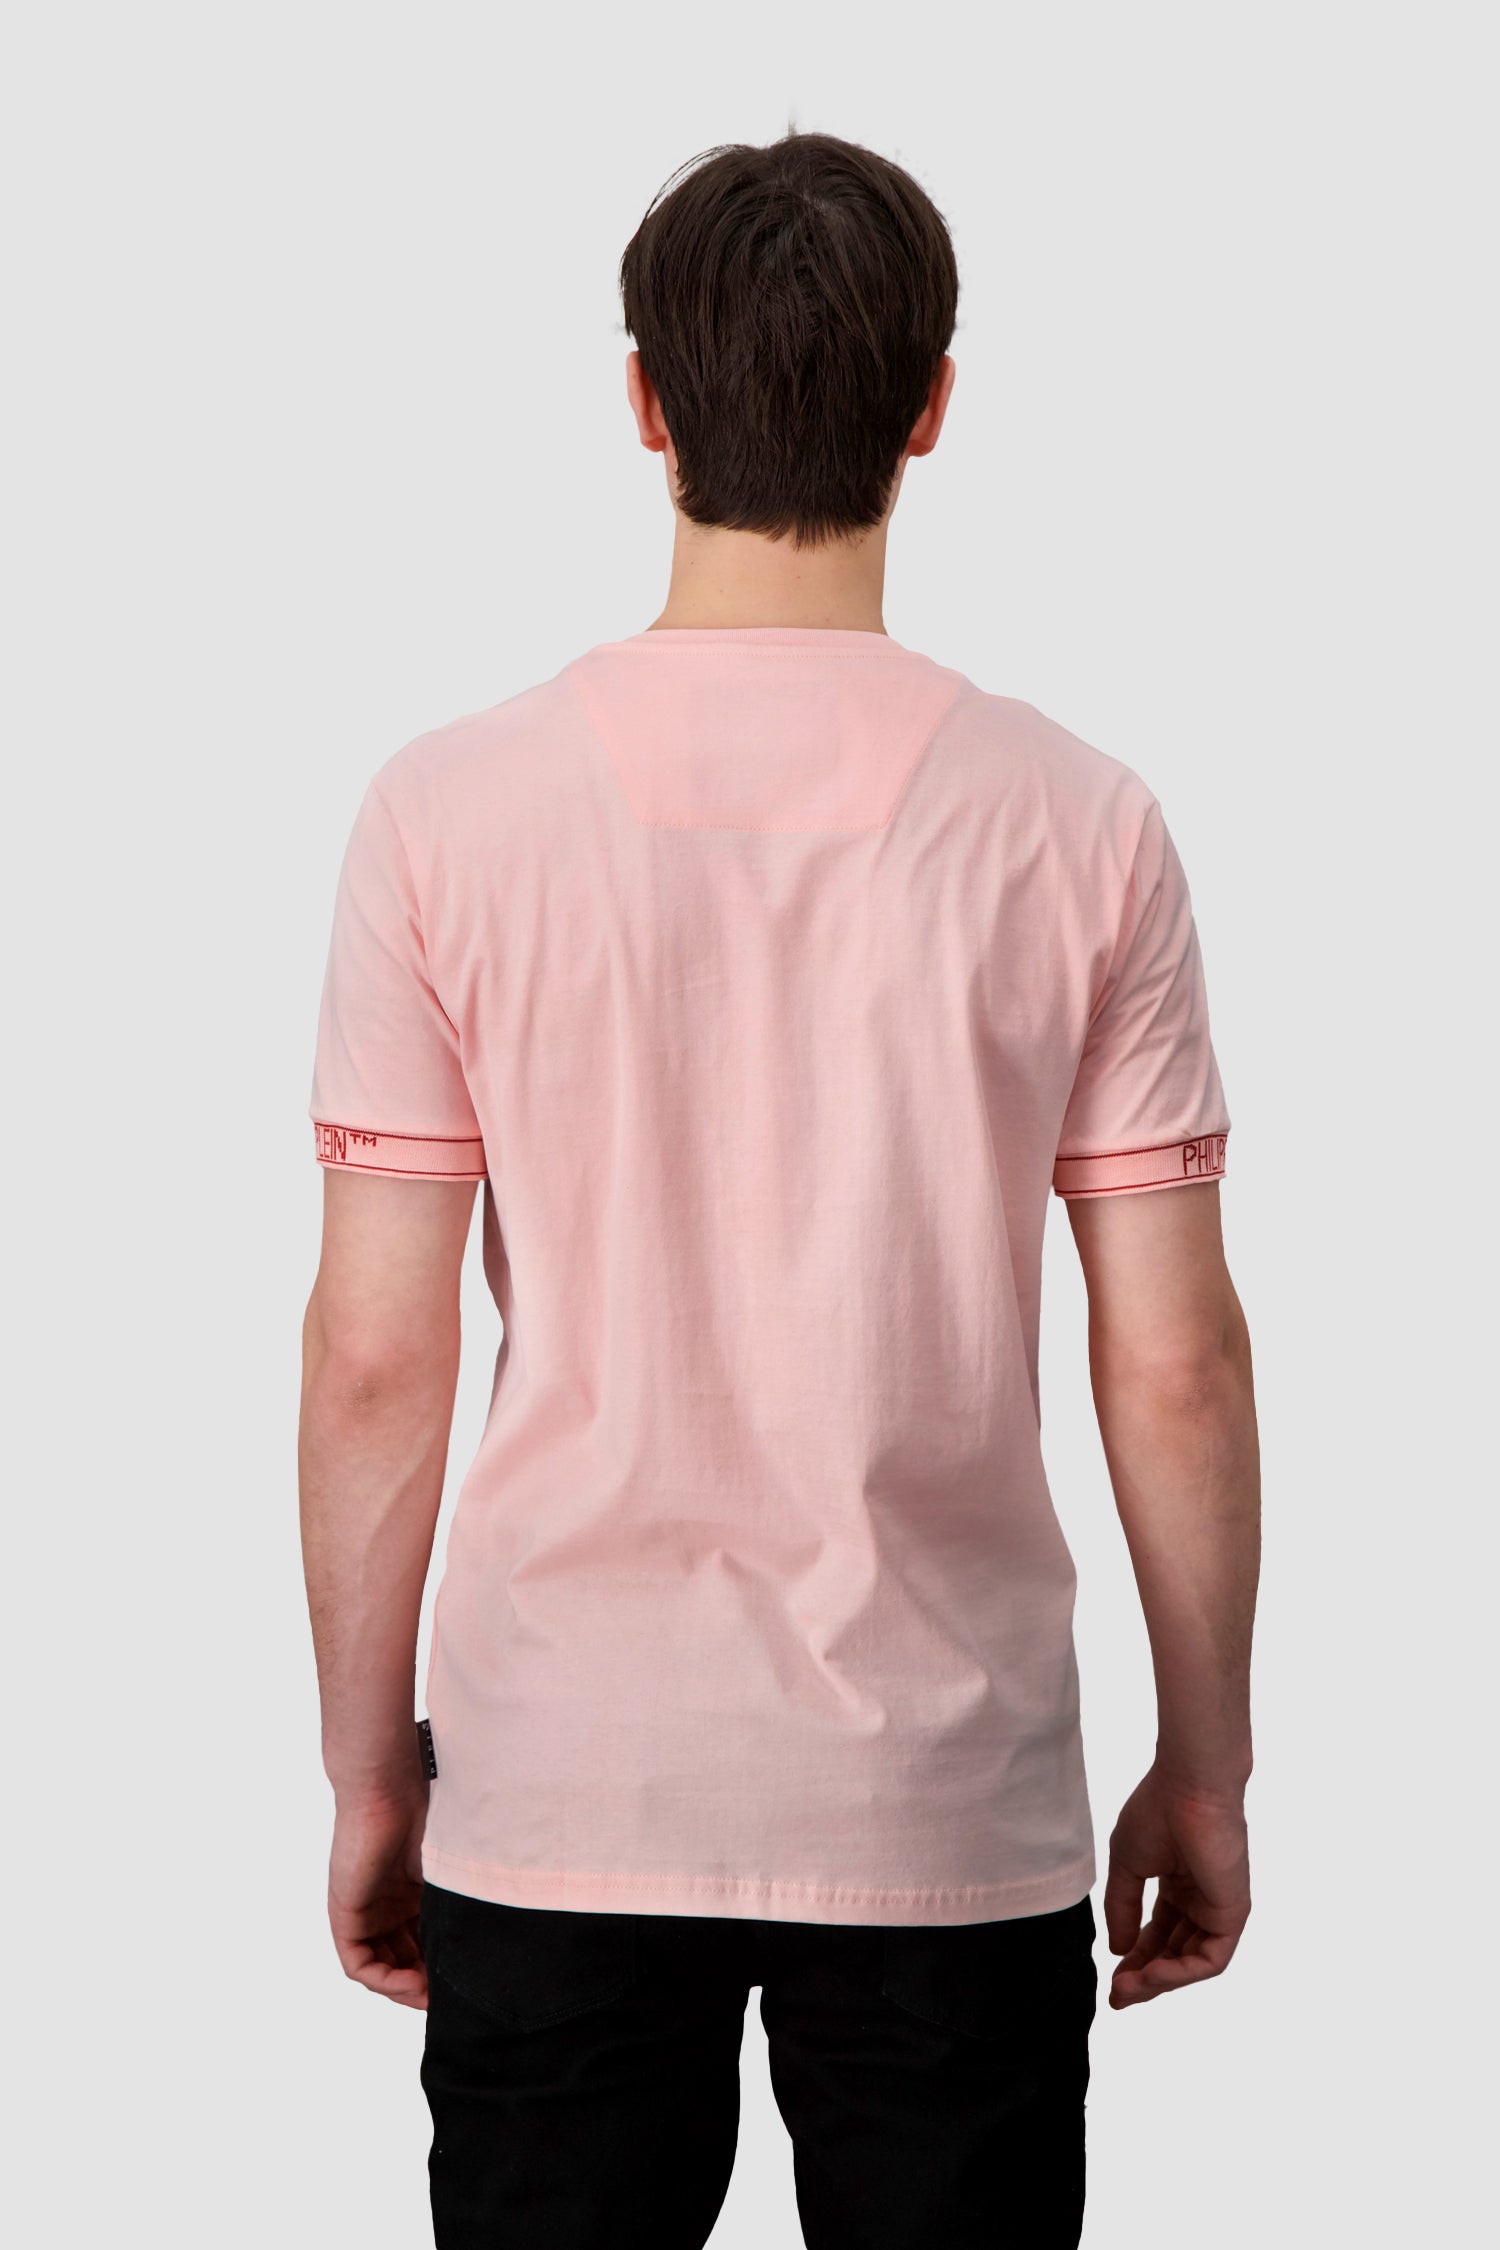 Philipp Plein Rose/Pink SS V-Neck T-Shirt